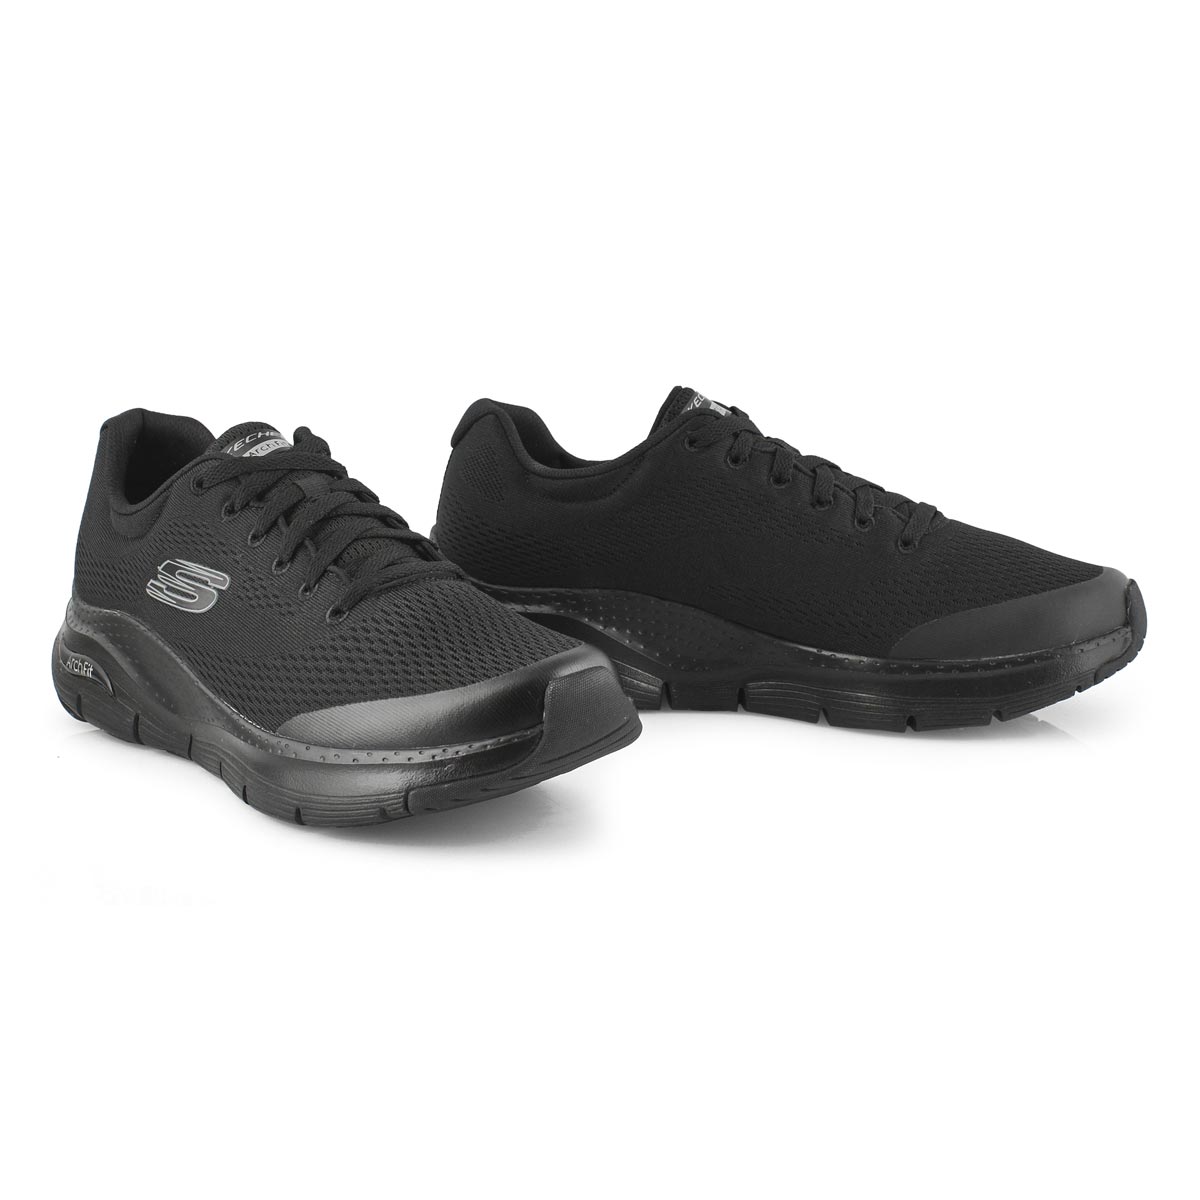 Men's Arch Fit Sneakers - Black